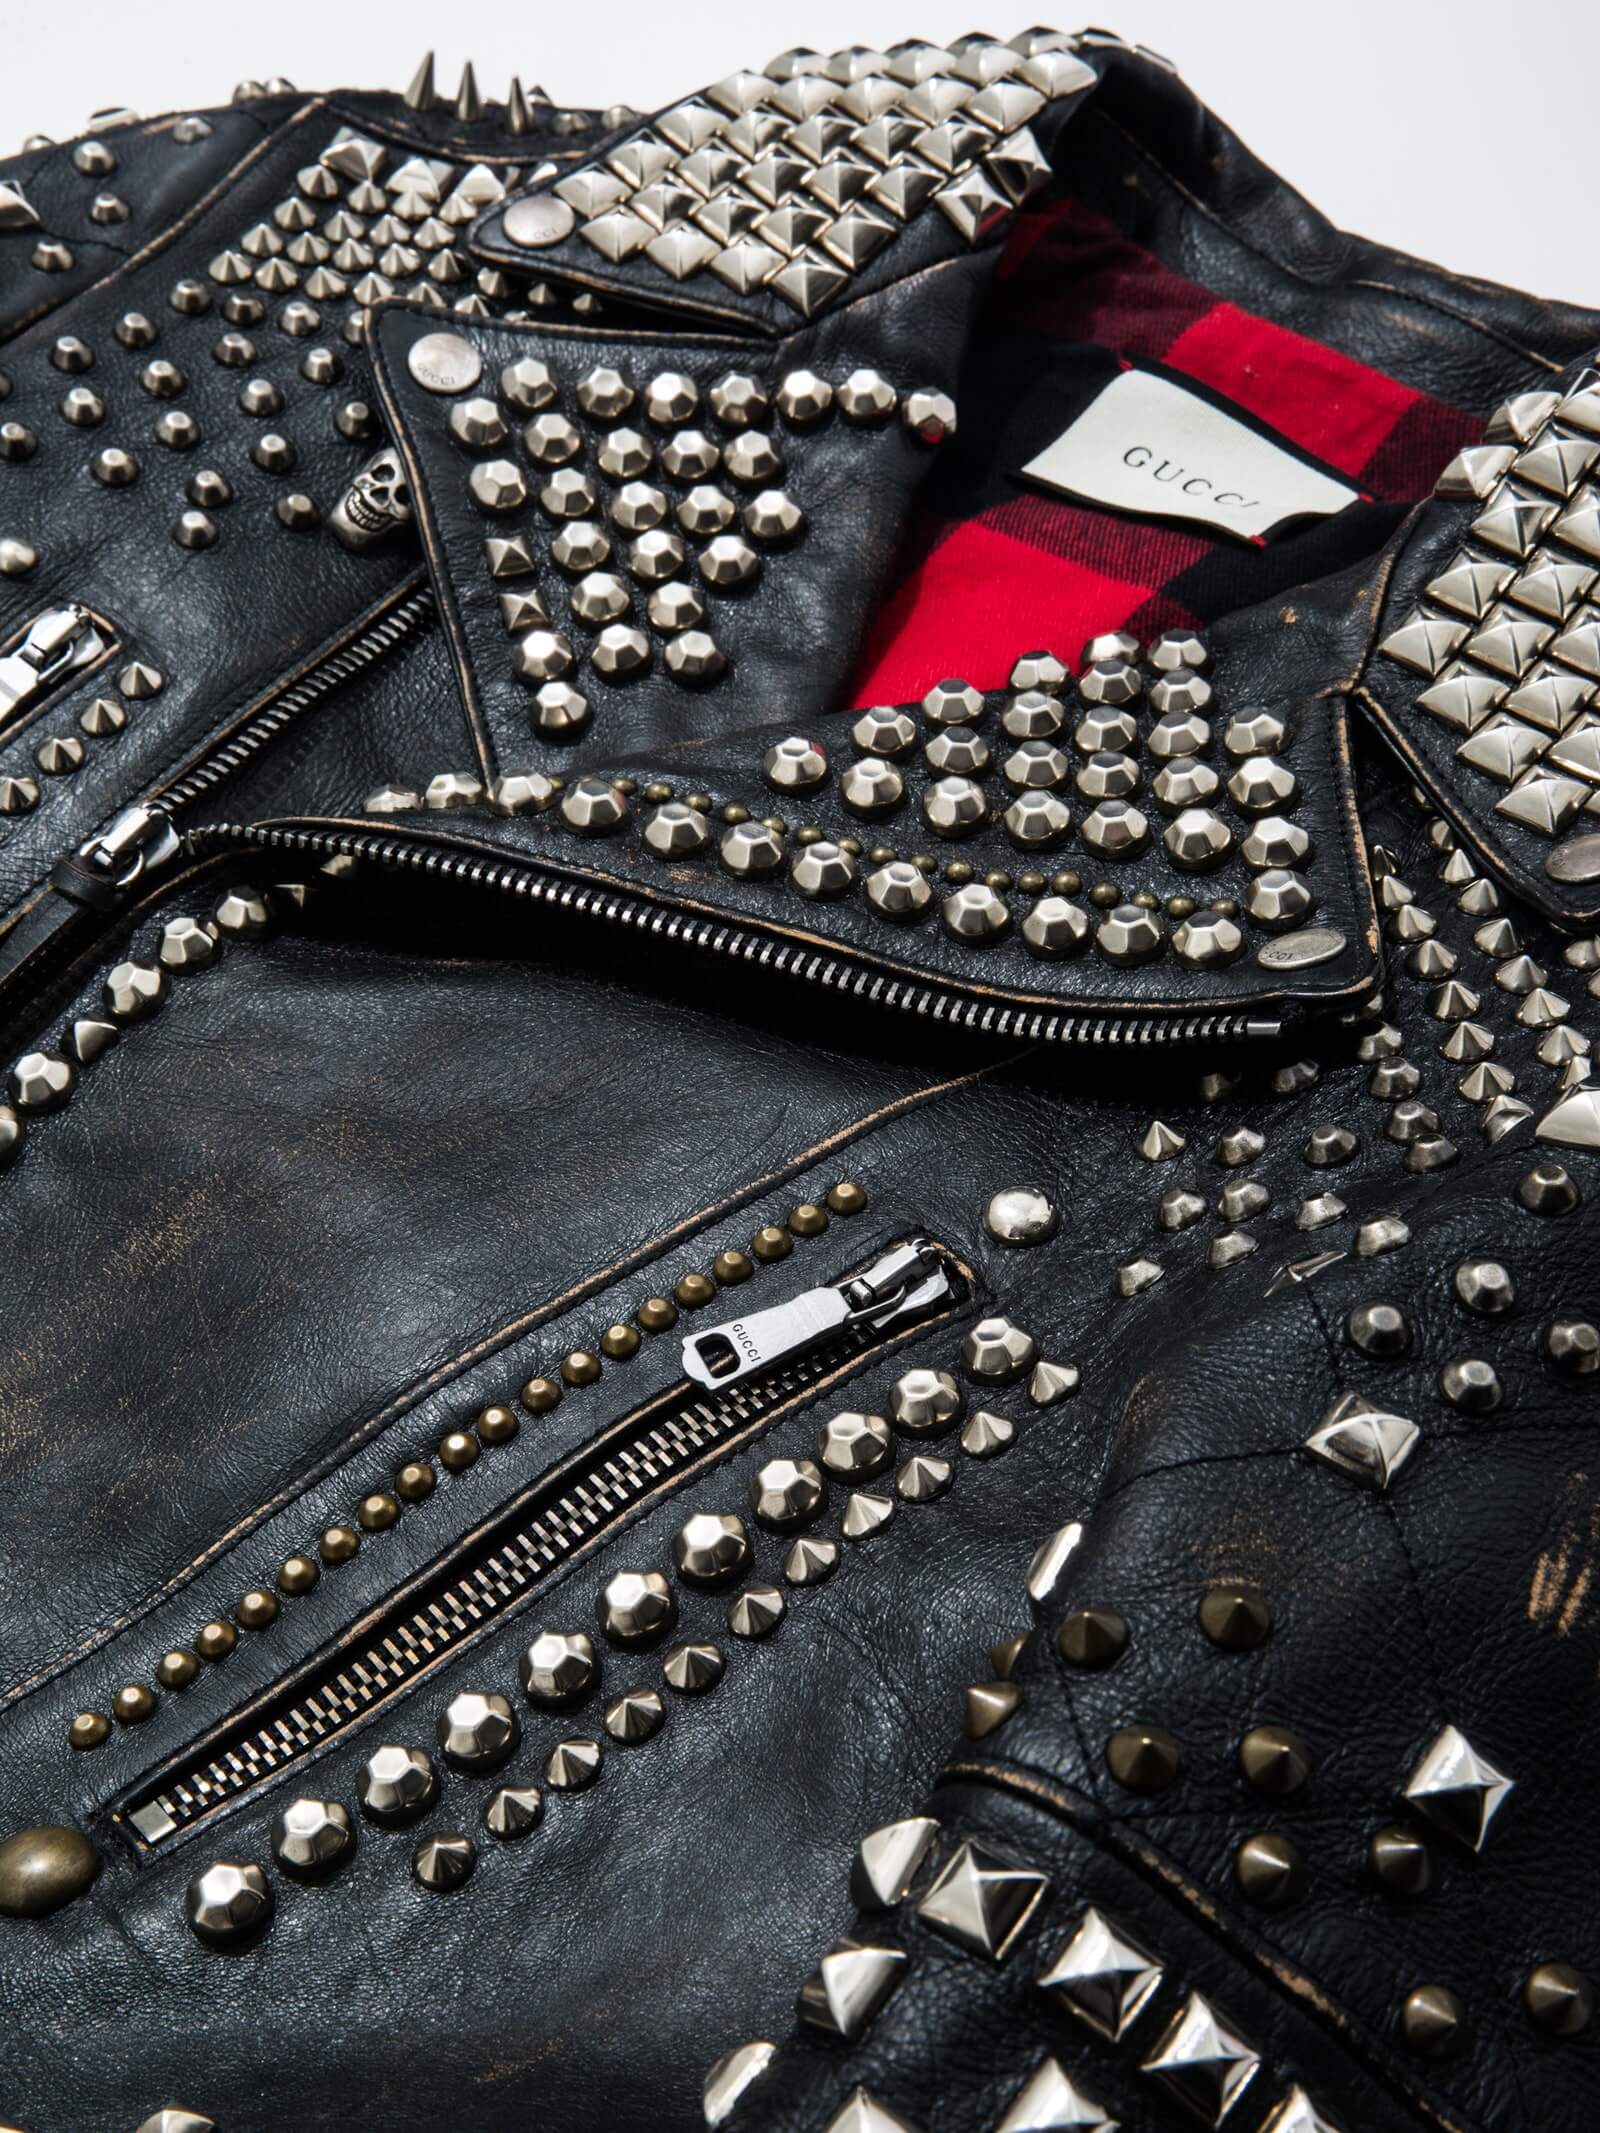 Studded Biker Jacket And Printed Leather For Men